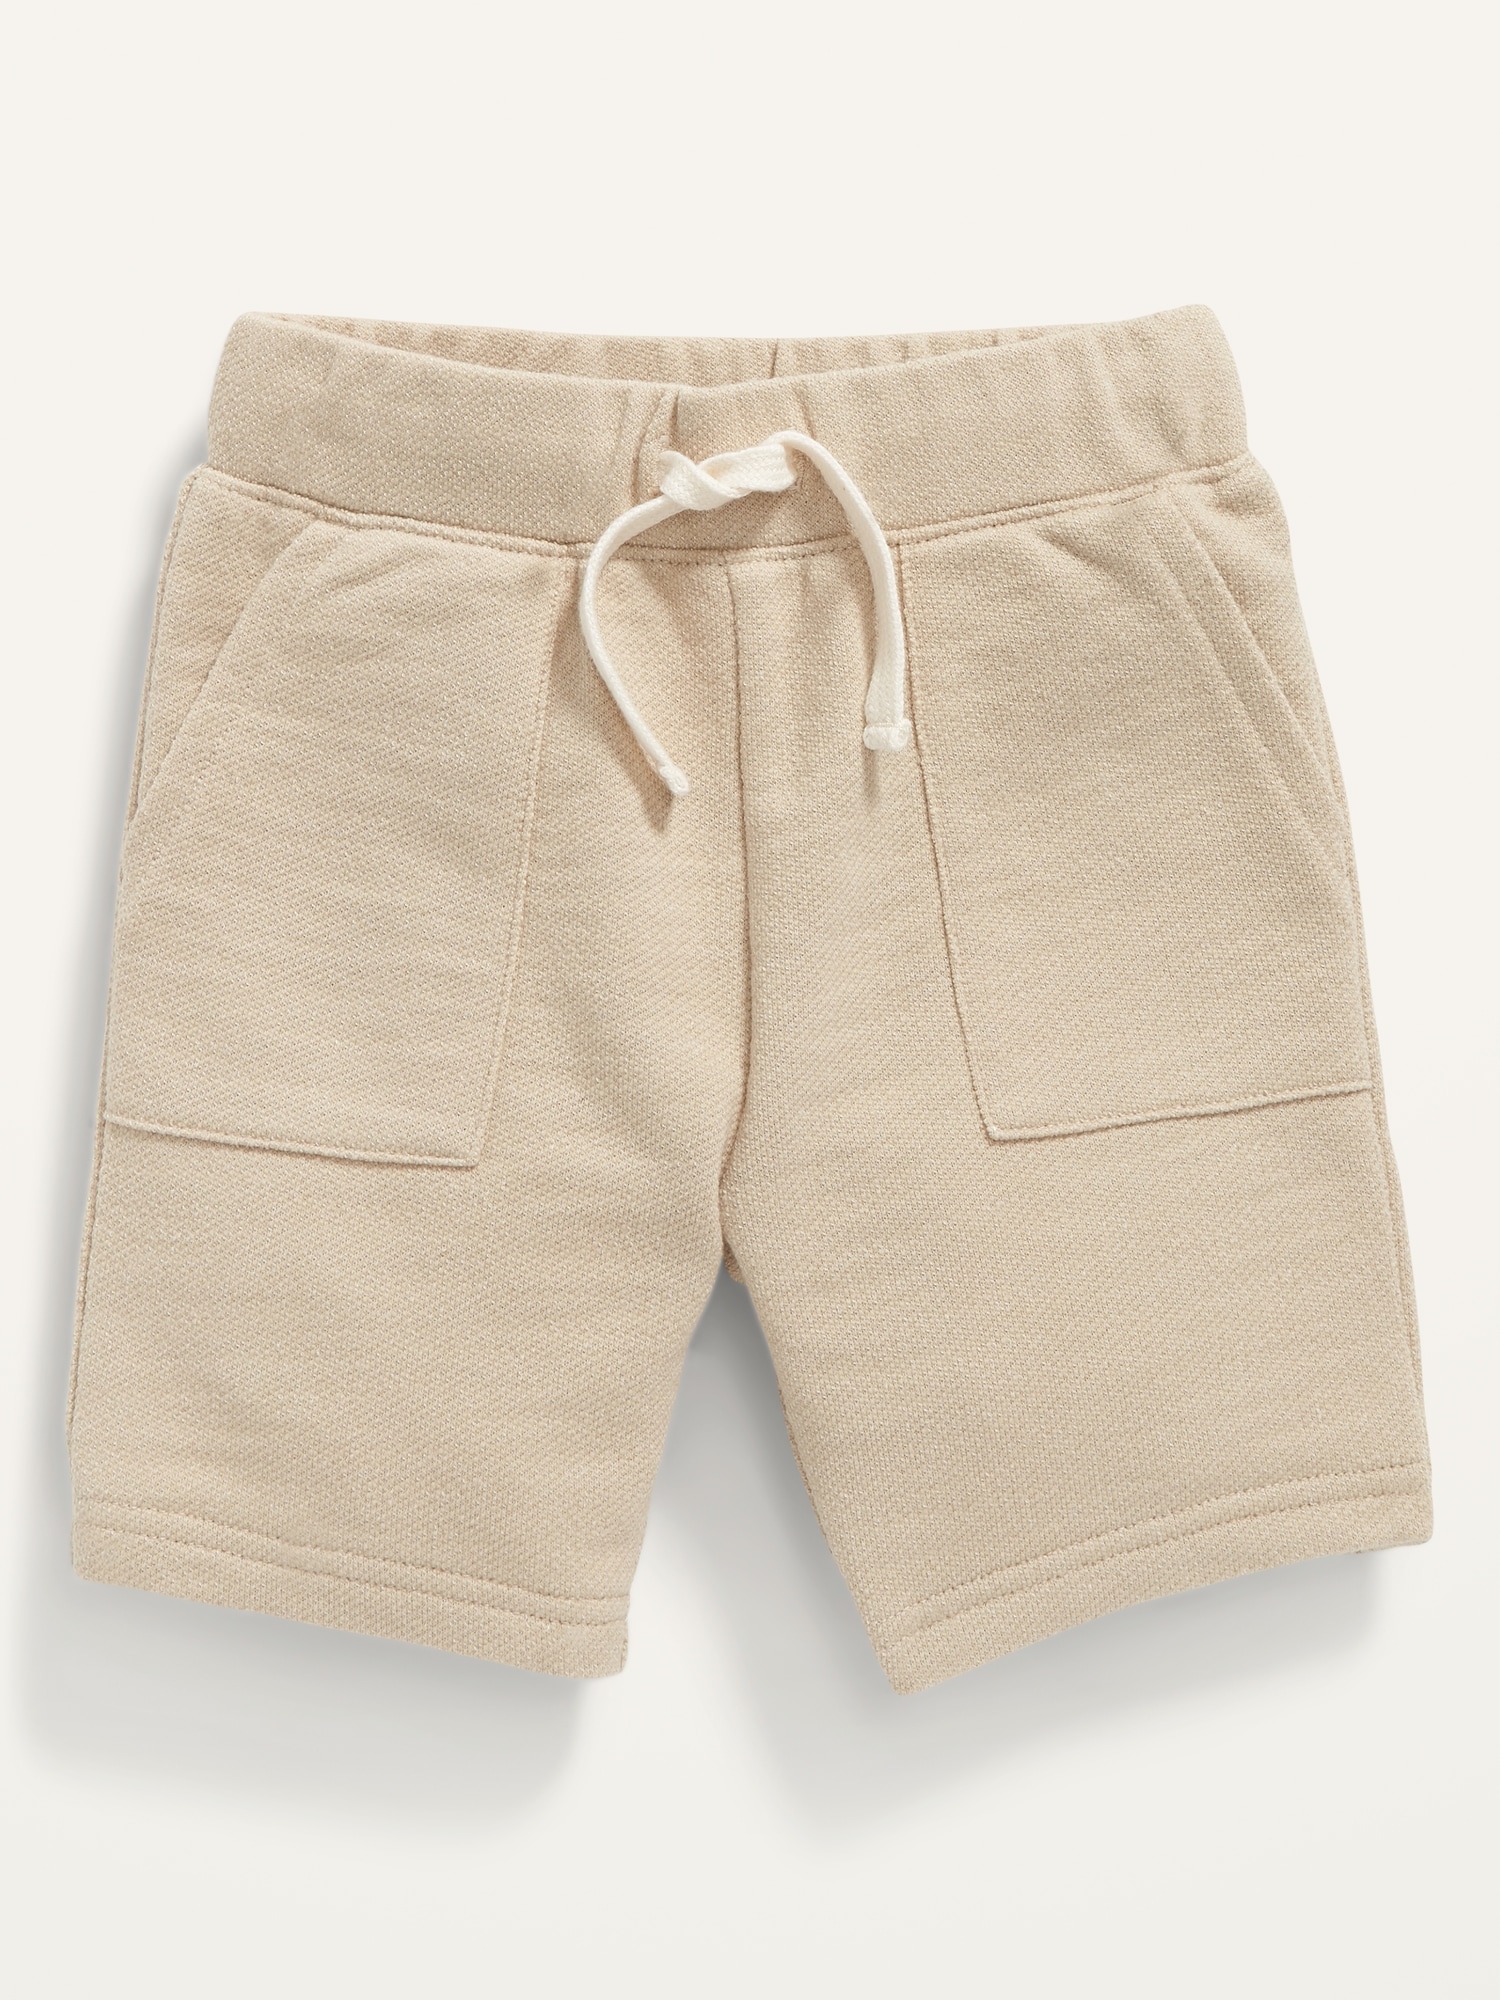 Functional Drawstring Utility Pocket Shorts for Toddler Boys | Old Navy